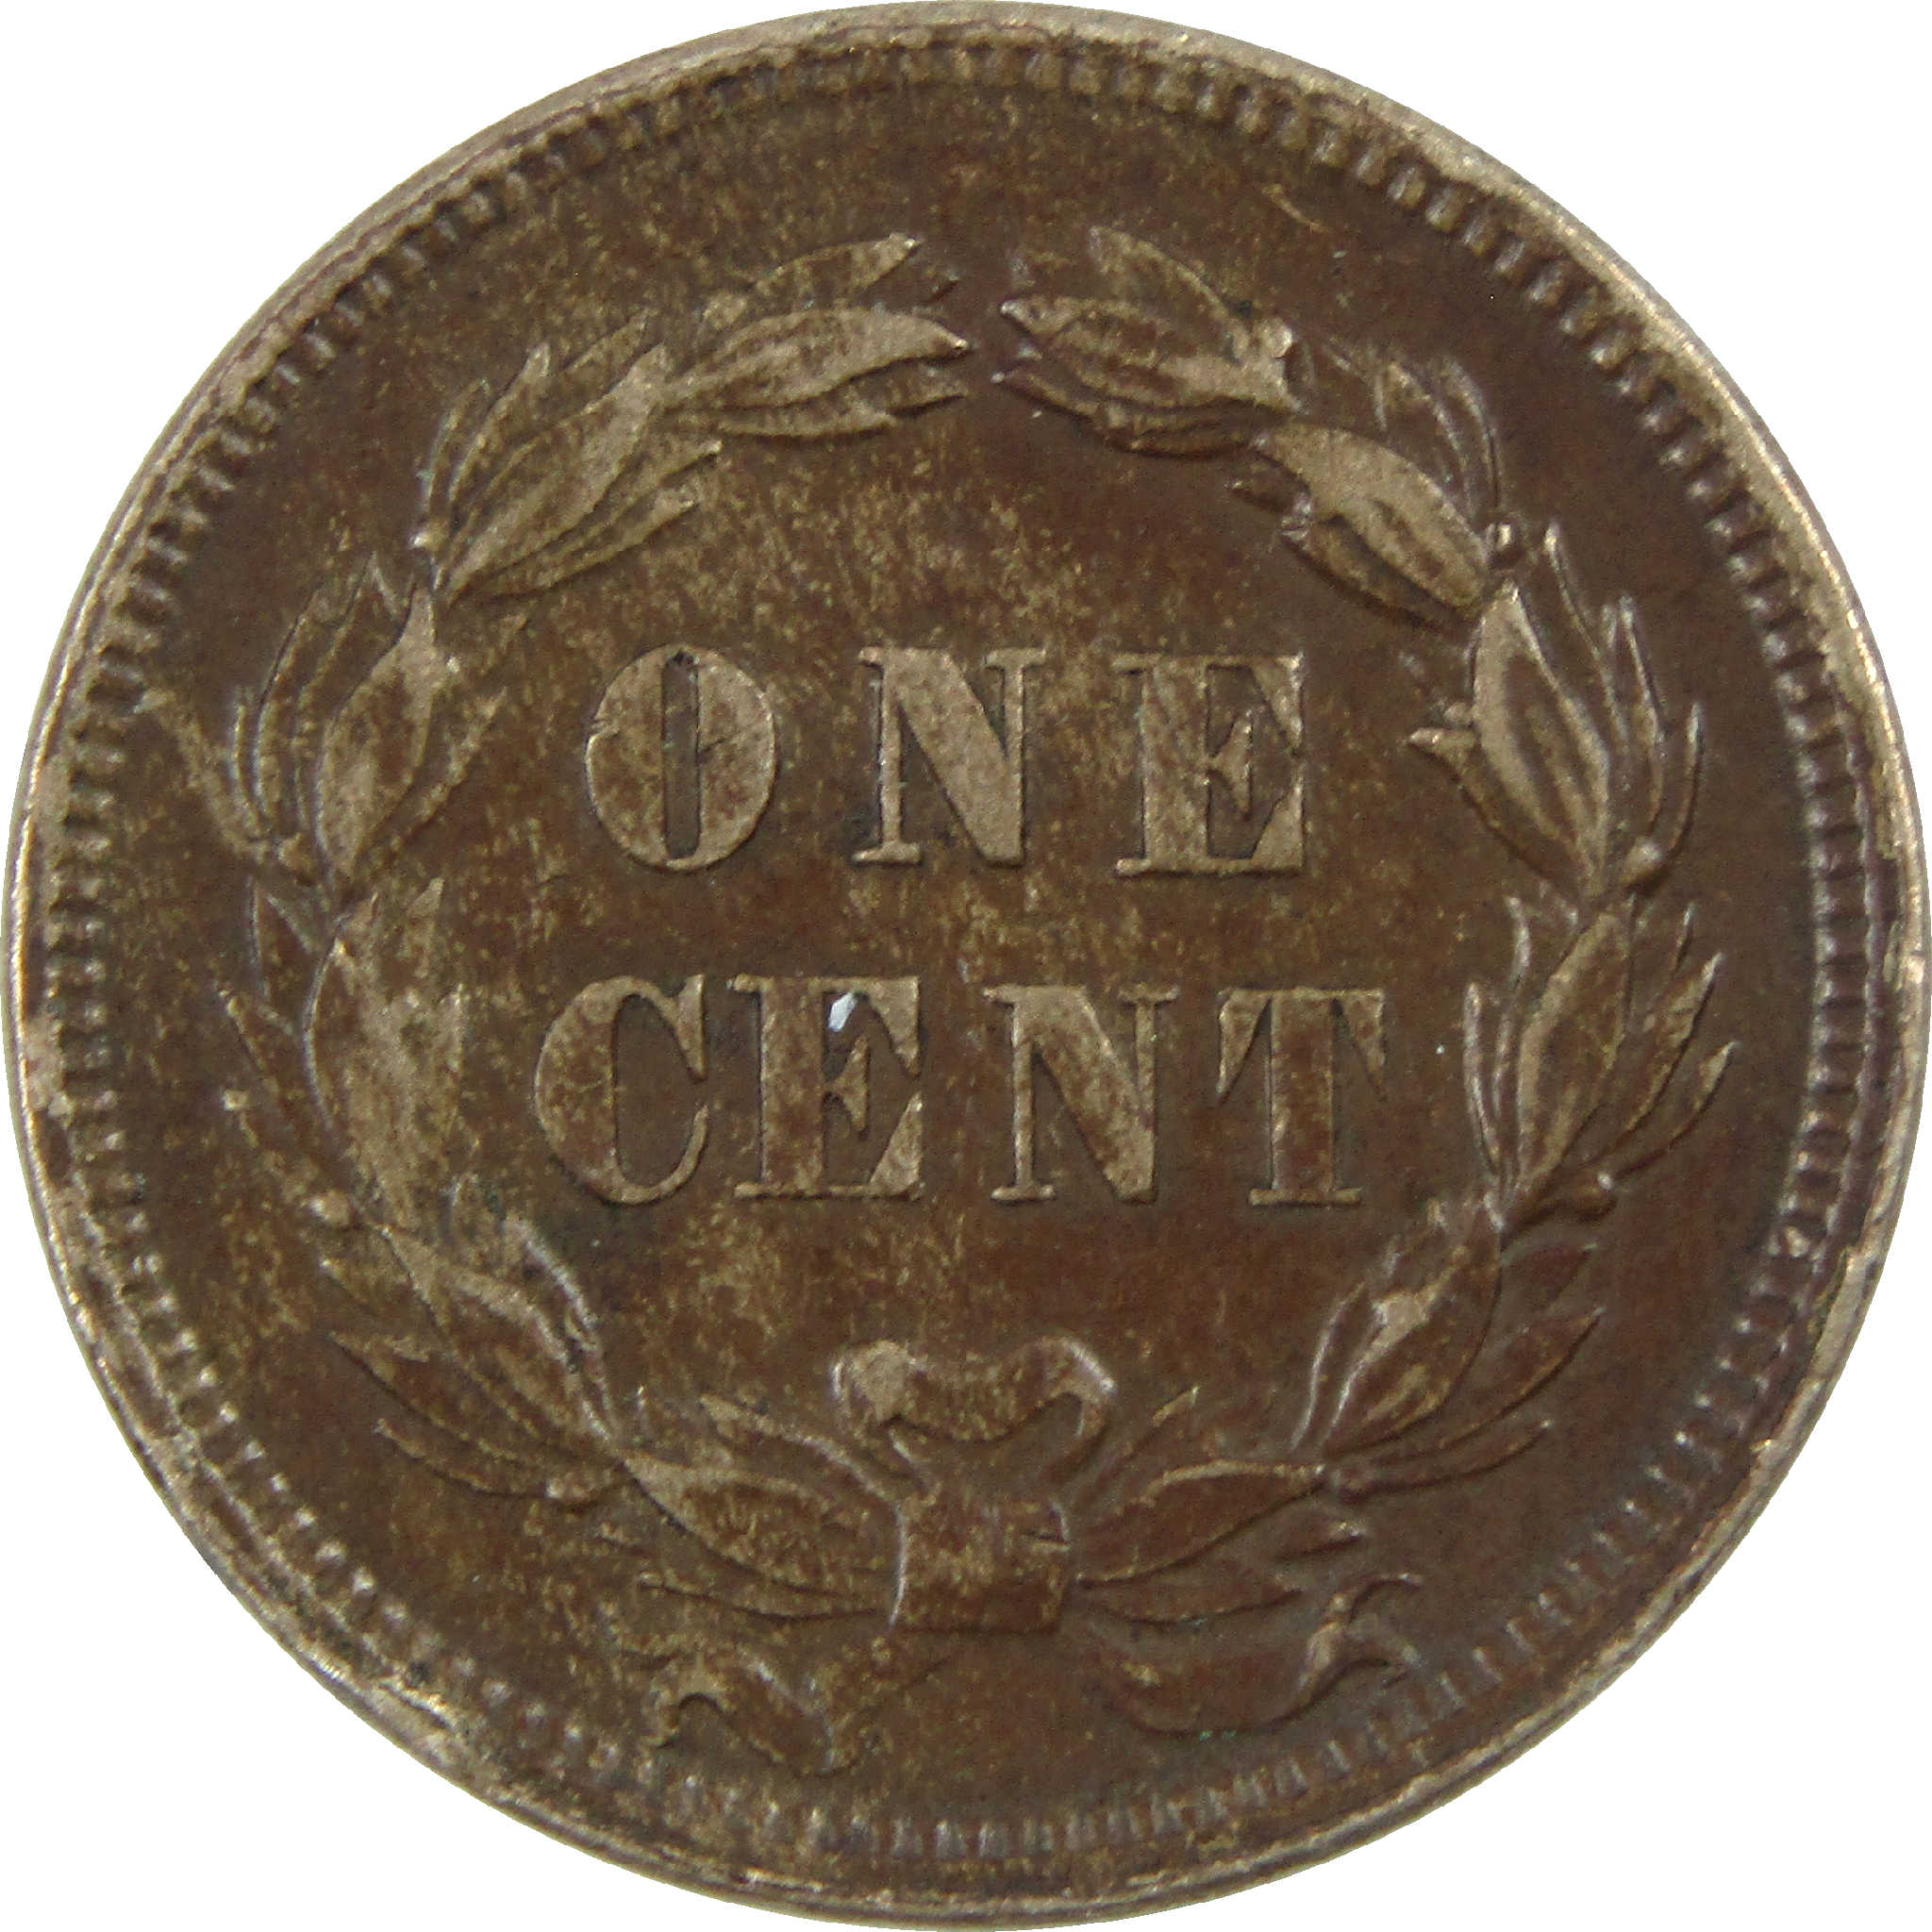 1859 Indian Head Cent XF Details Copper-Nickel SKU:I12350